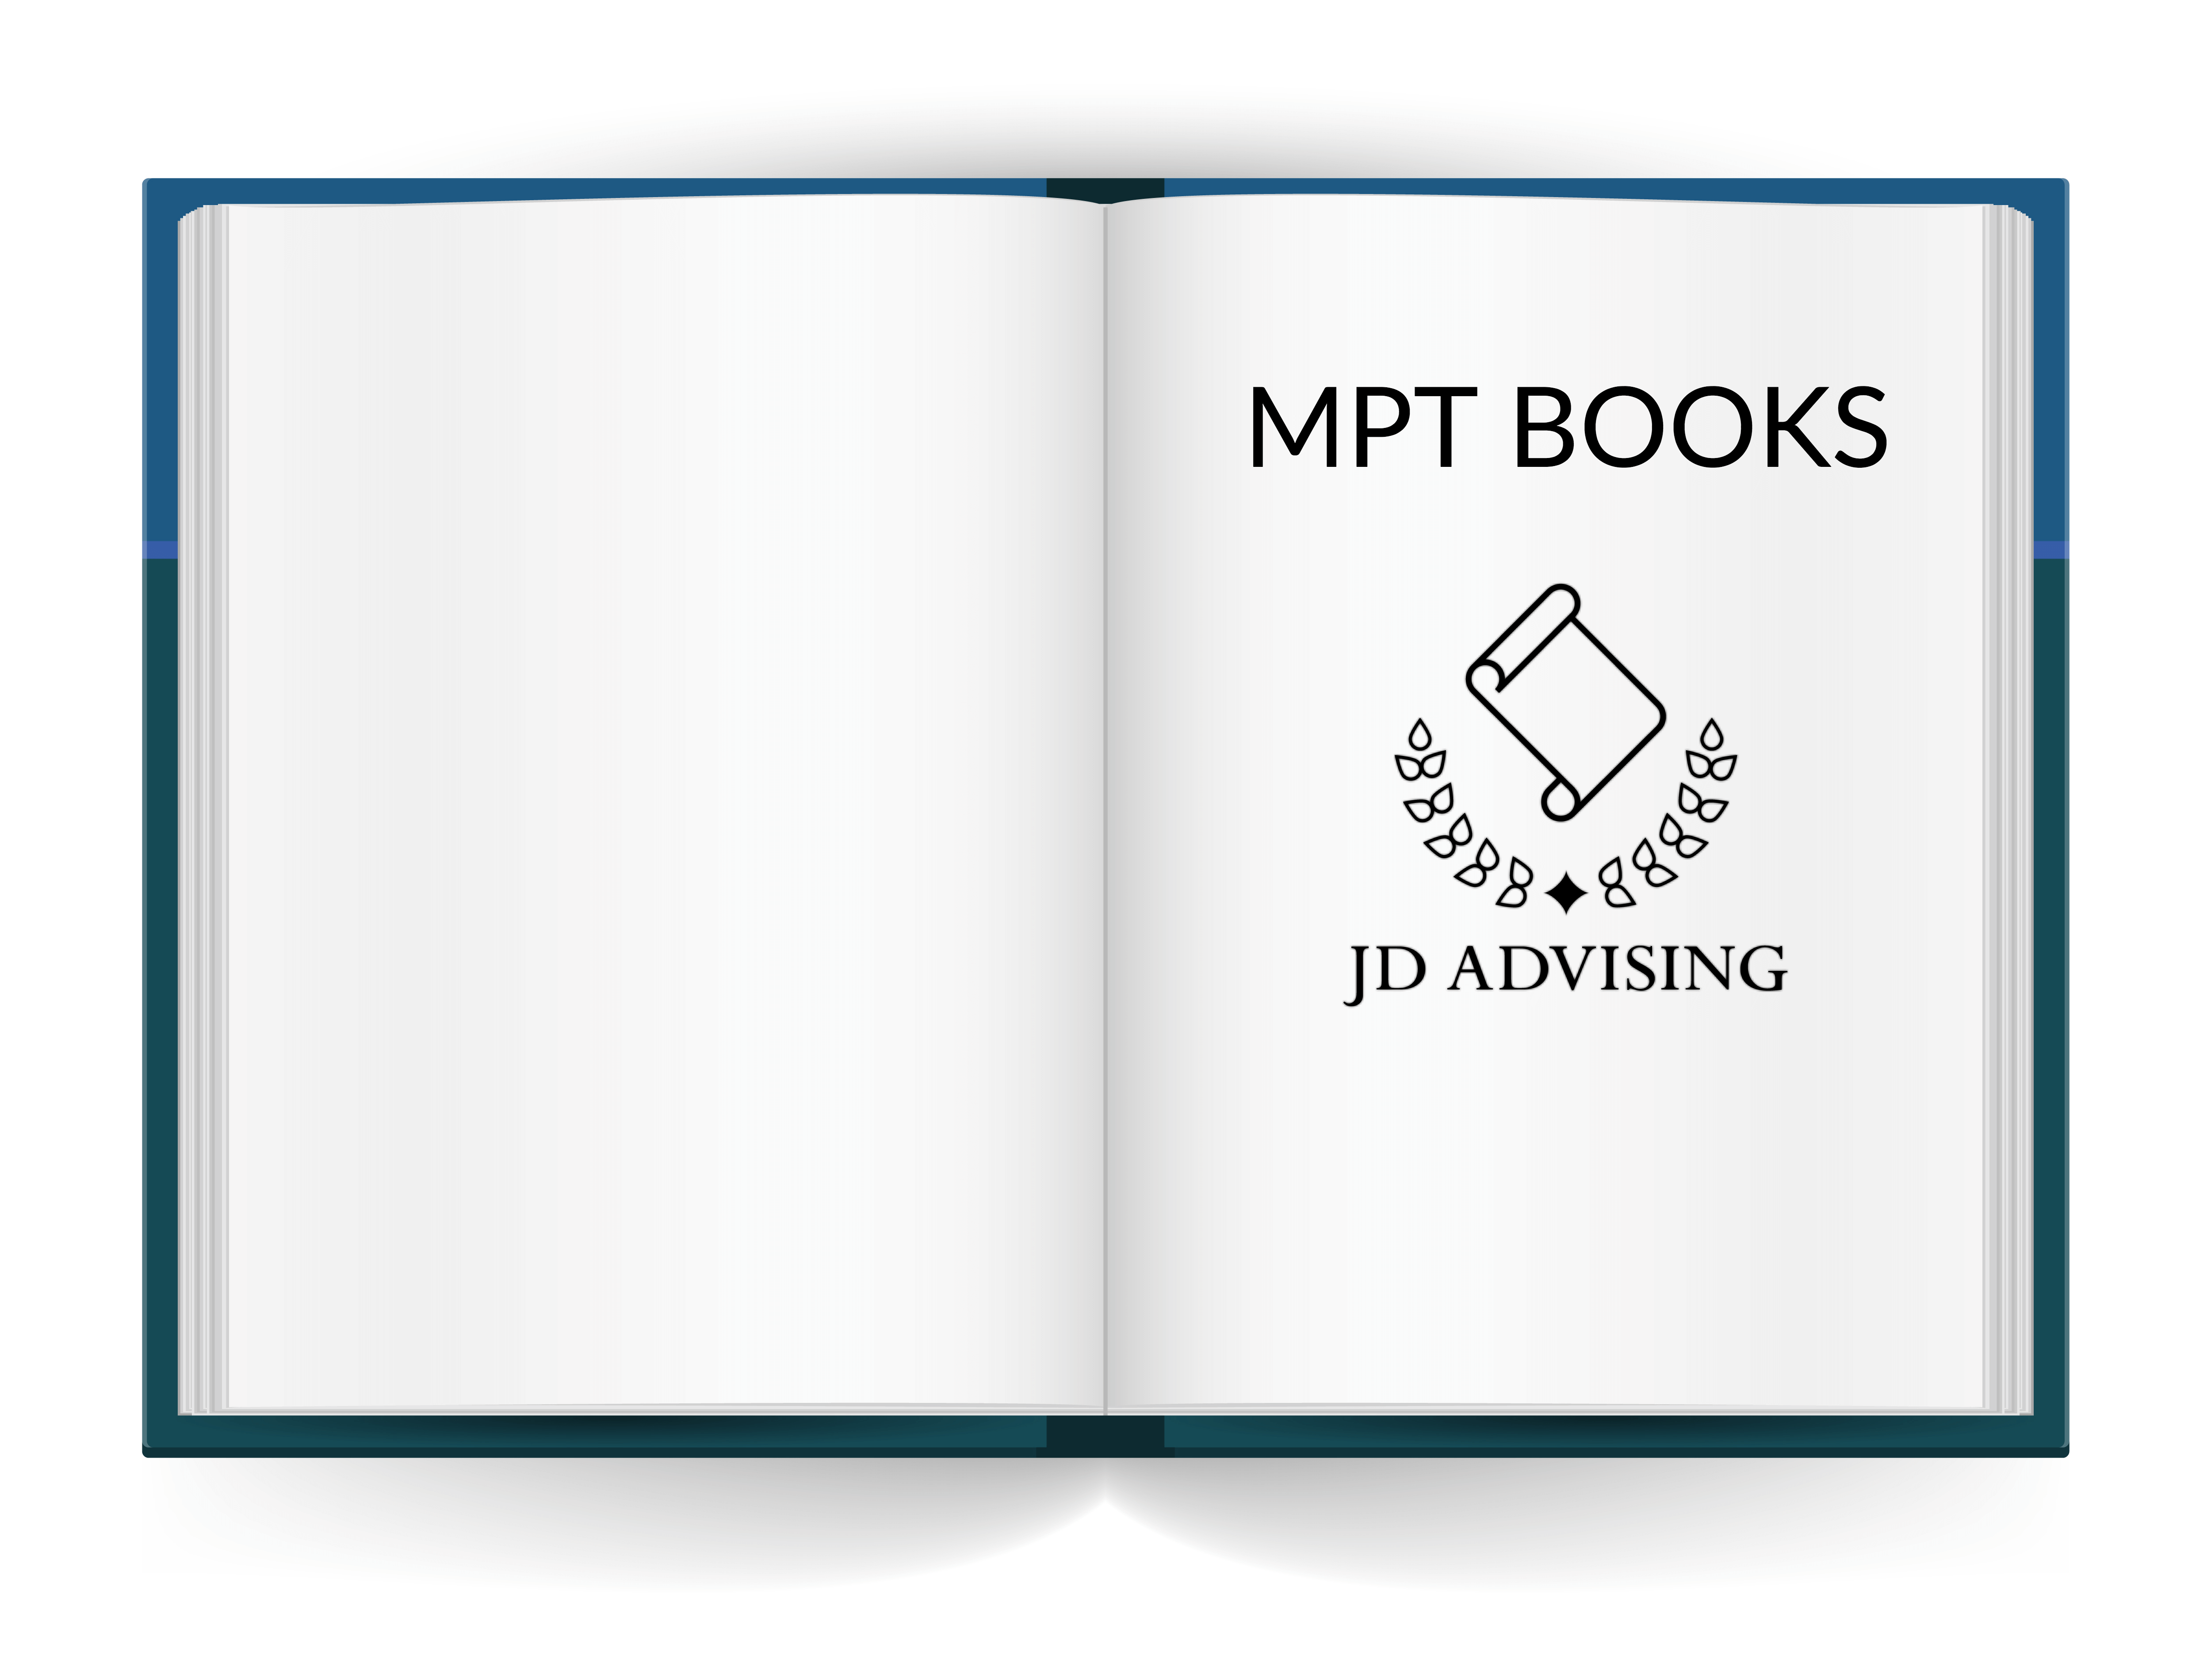 mpt books, multistate performance test books